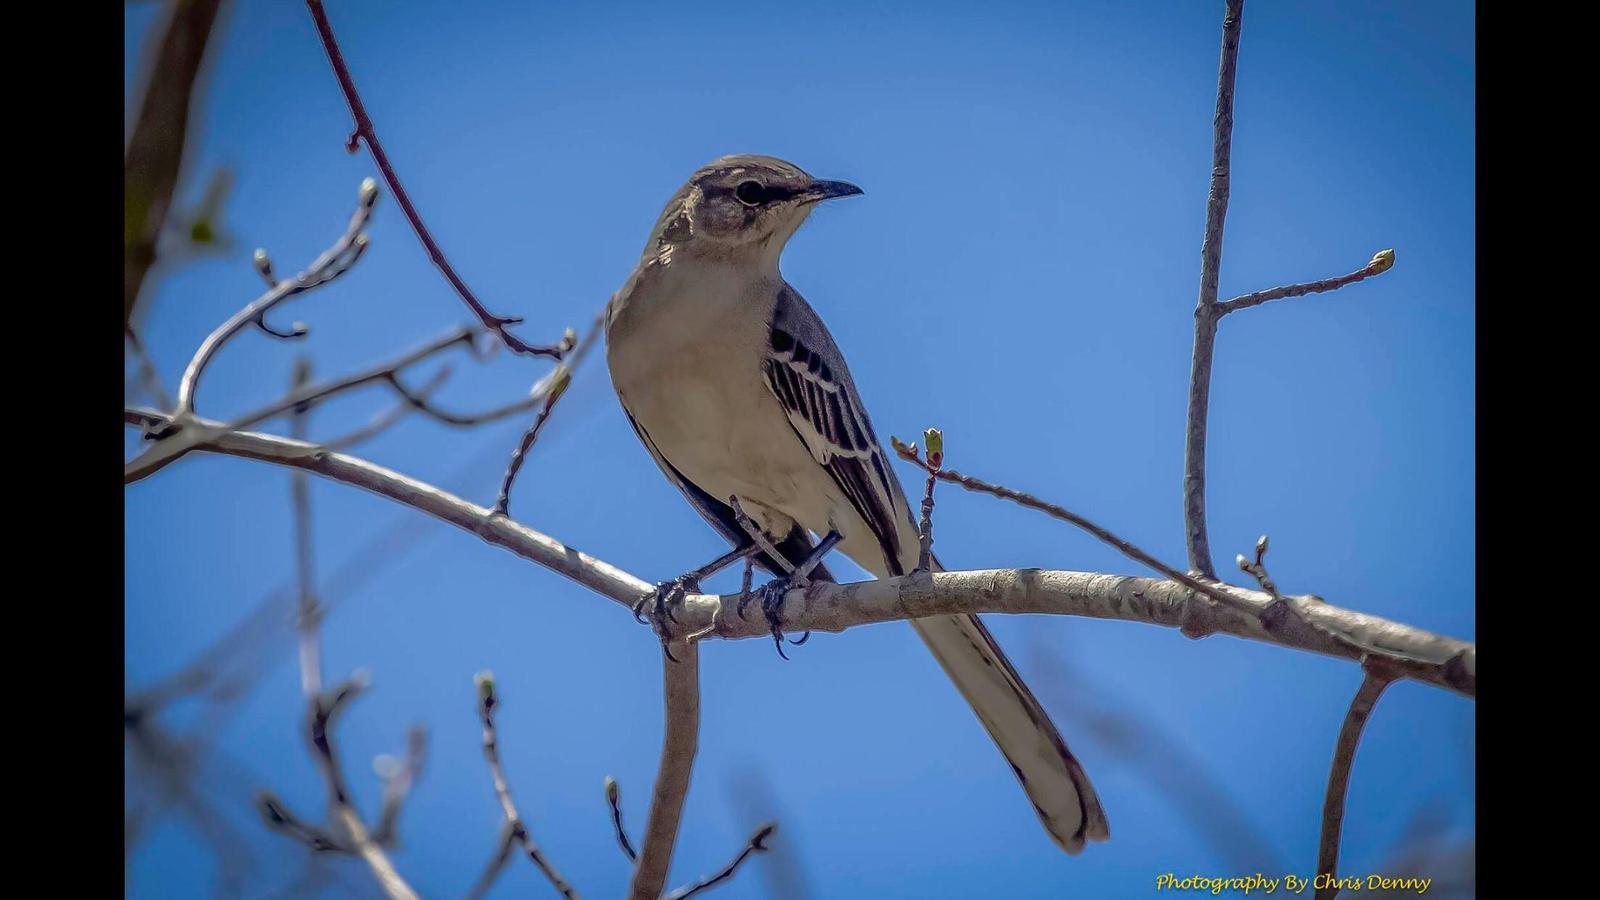 Northern Mockingbird Photo by Chris Denny